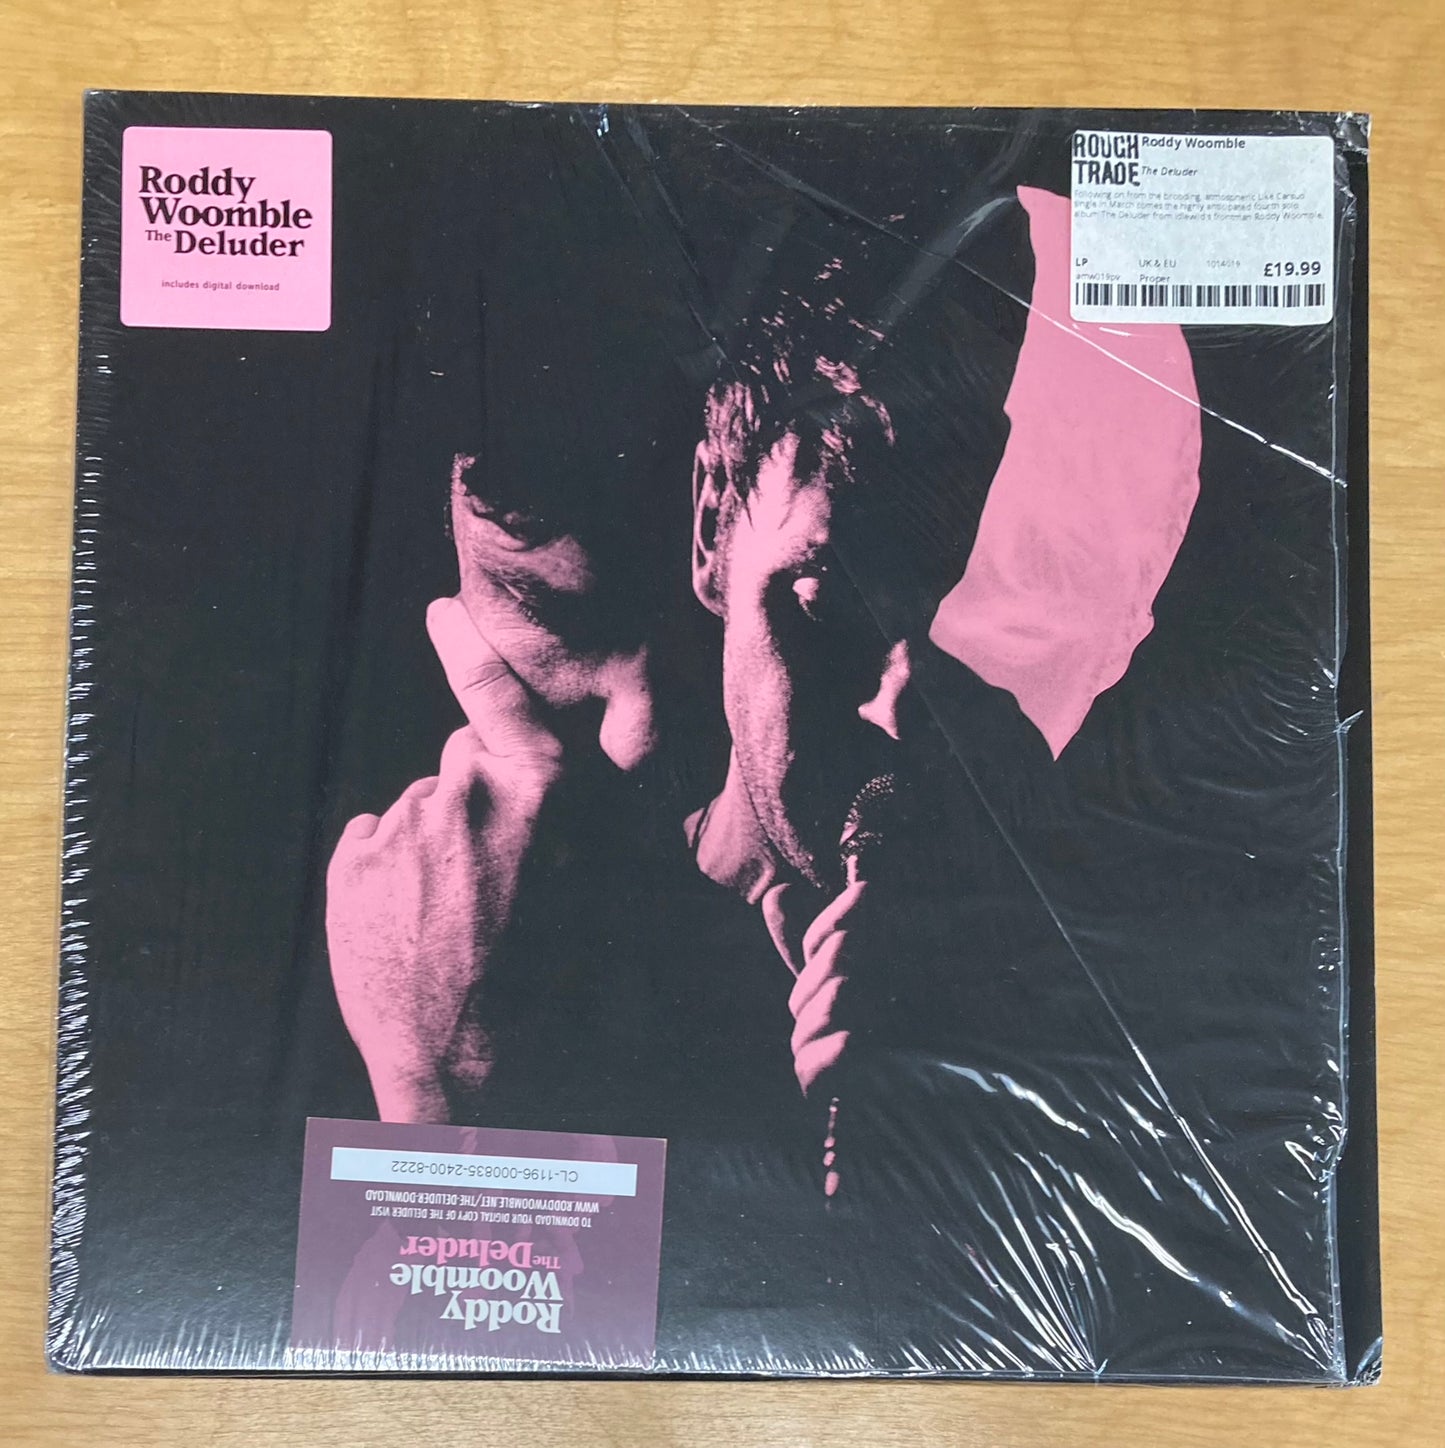 The Deluder - Roddy Woomble *Pink Vinyl, UK Pressing, Shrink Wrap*